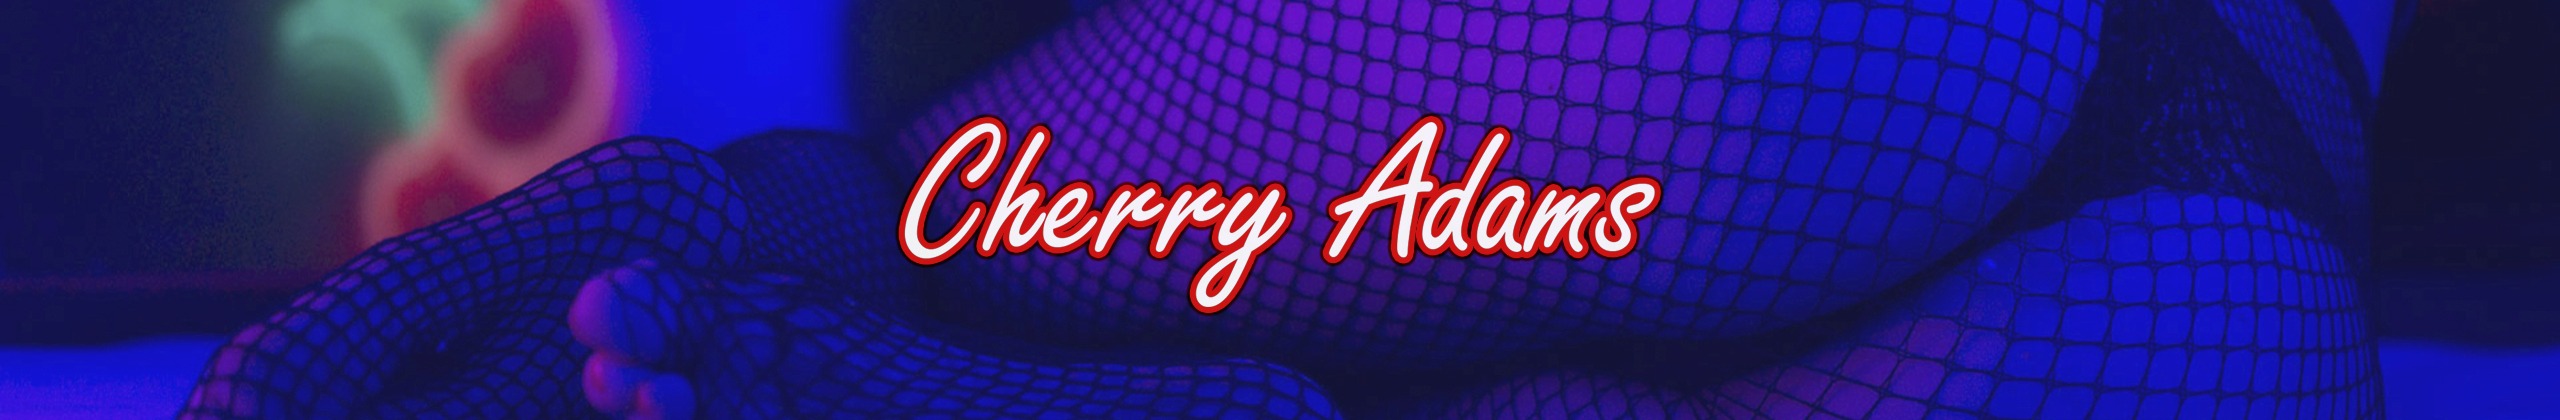 Cherry Adams - profile image